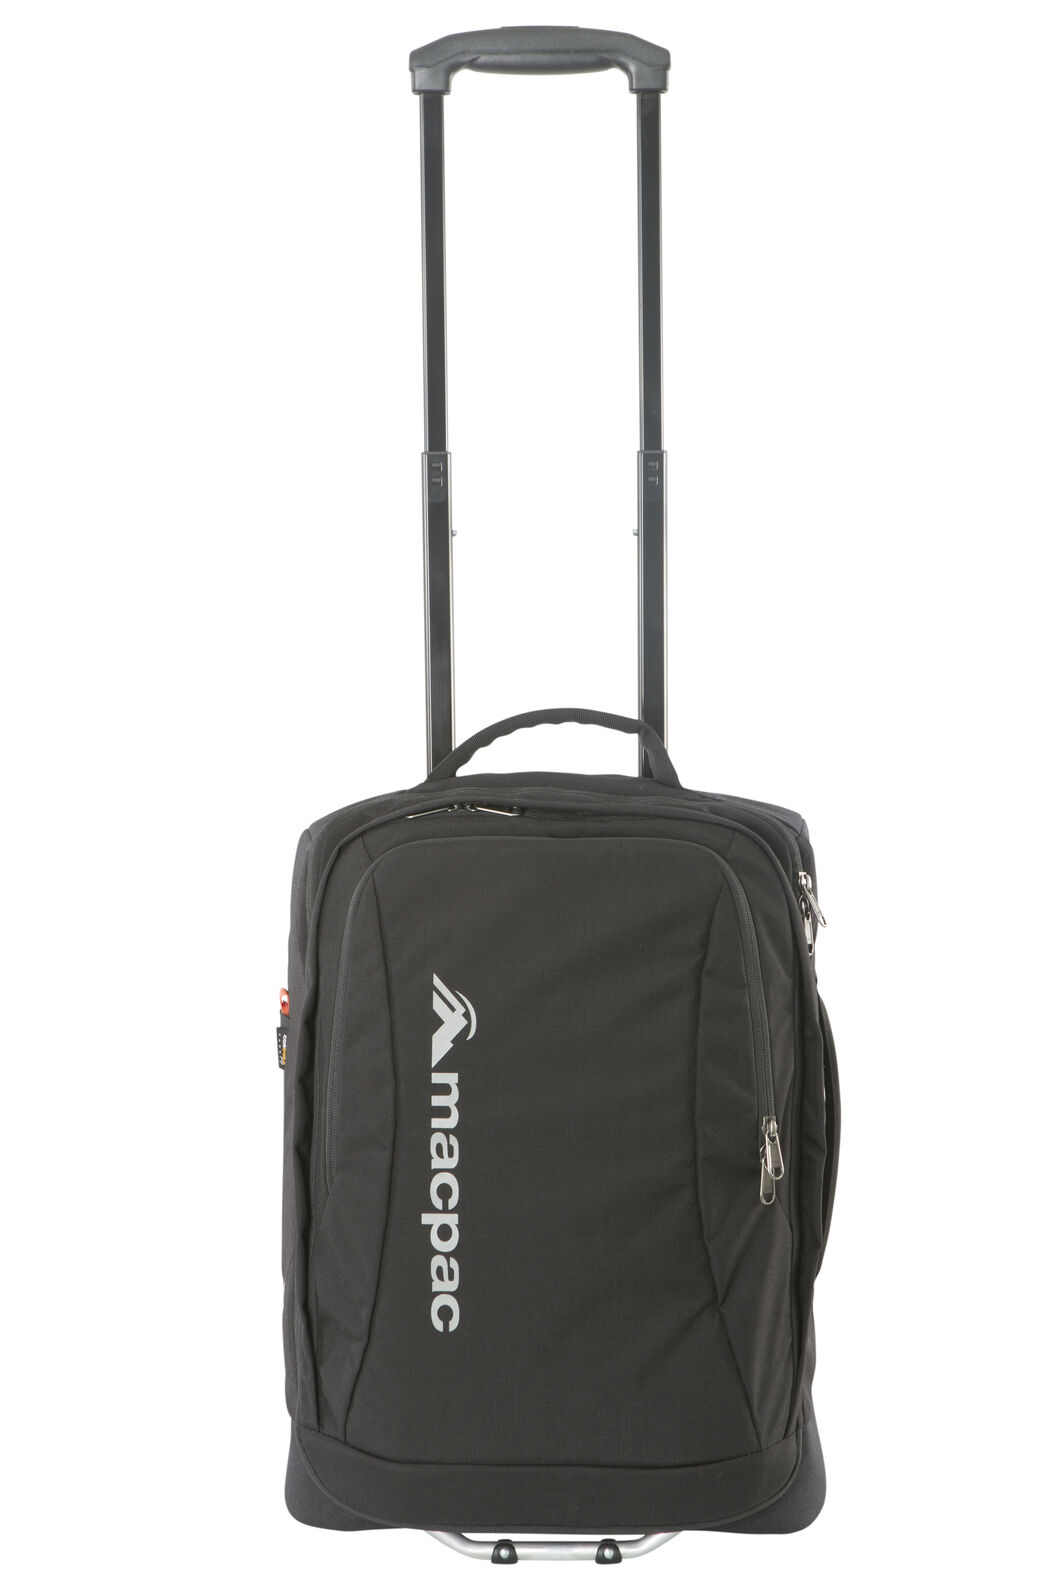 Macpac Global 35L Travel Bag | Macpac